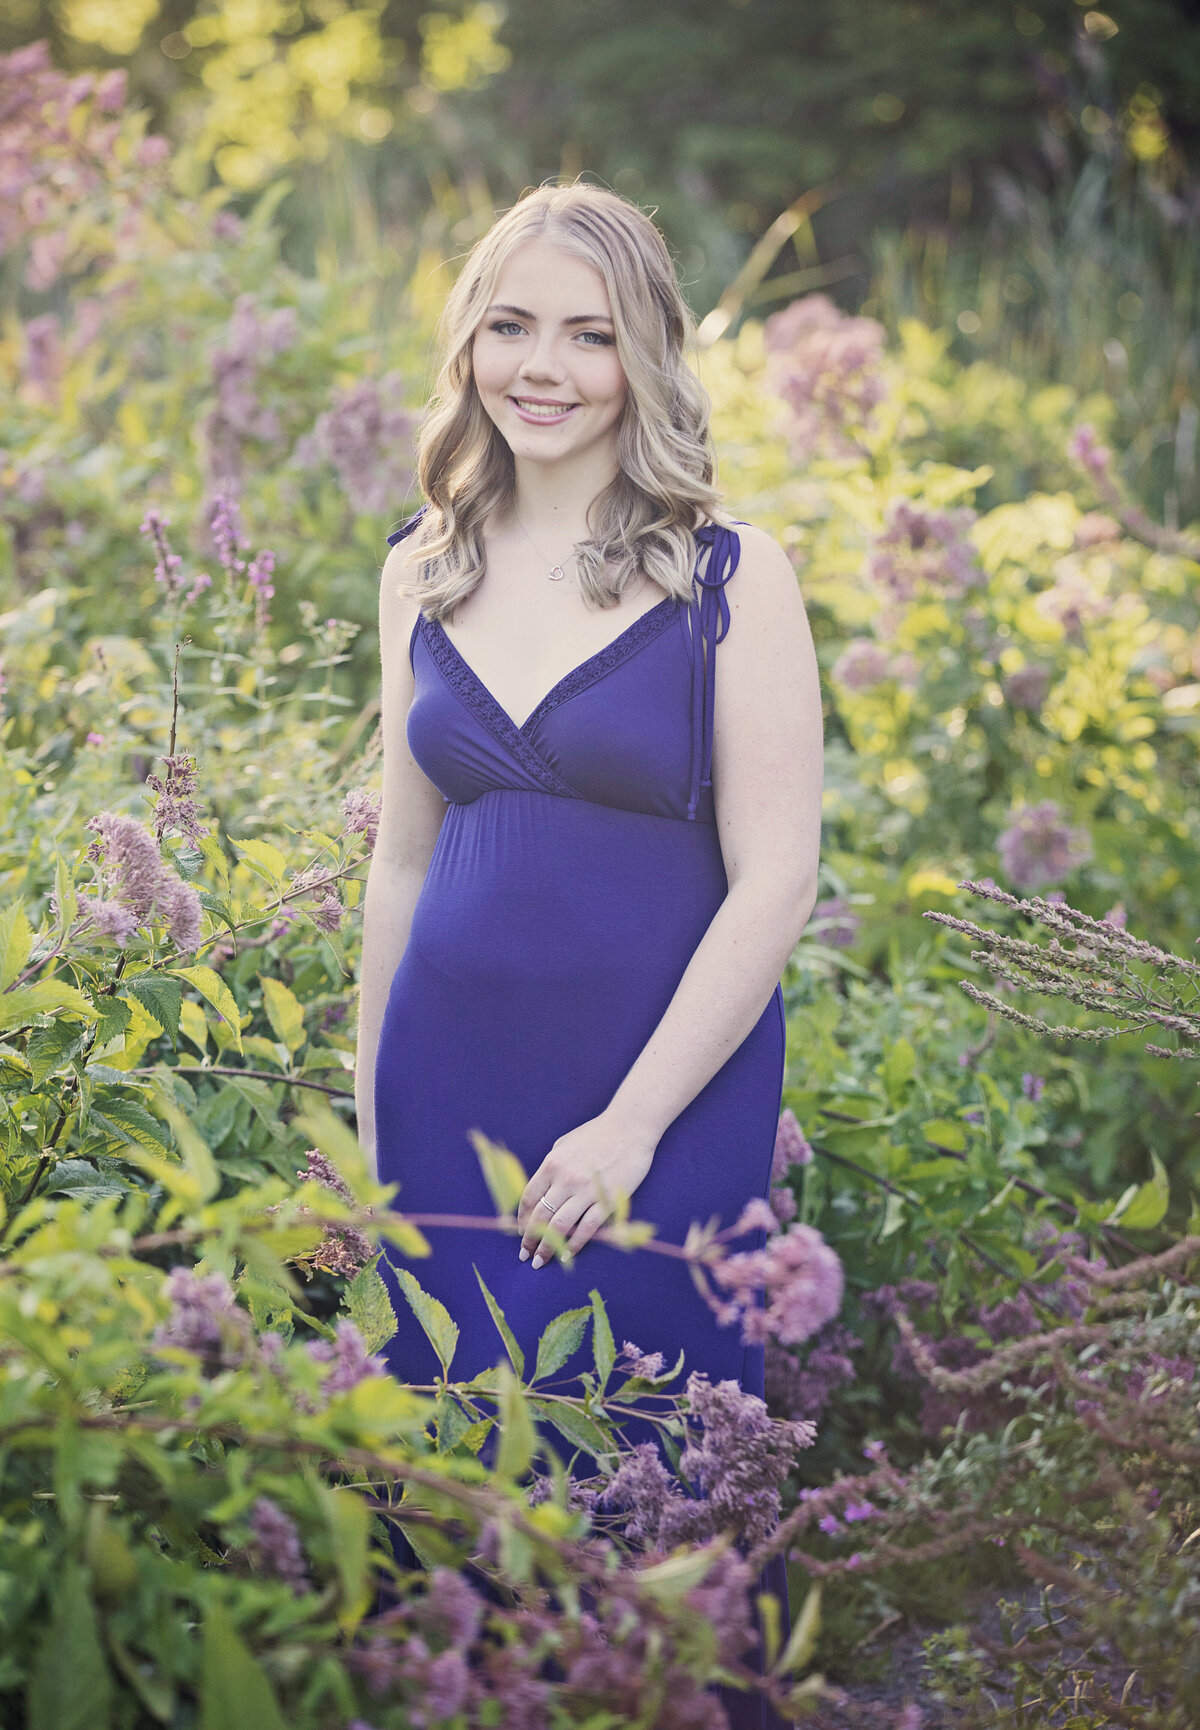 high school senior girl portrait outdoors in flowers - Kristen Zannella Photography